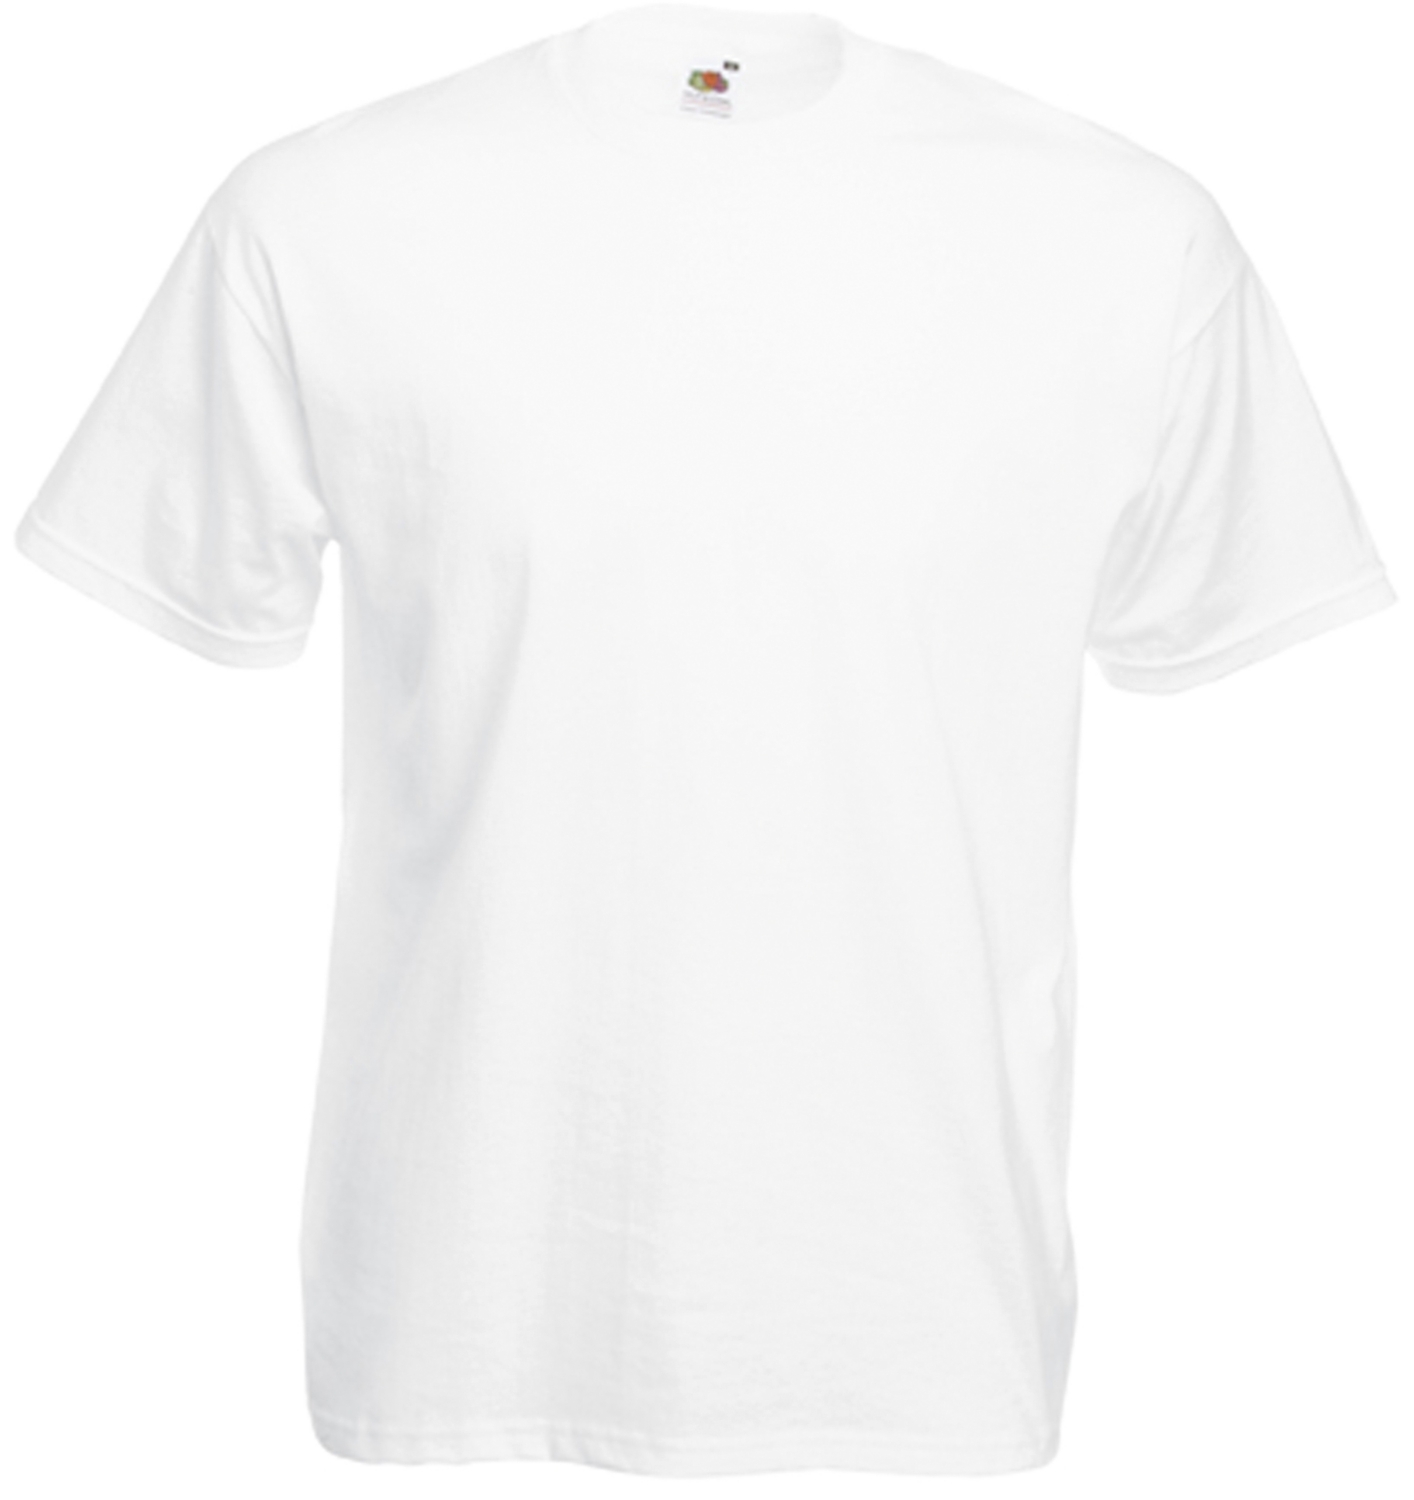  Tee-shirt Value-Weight - Blanc 